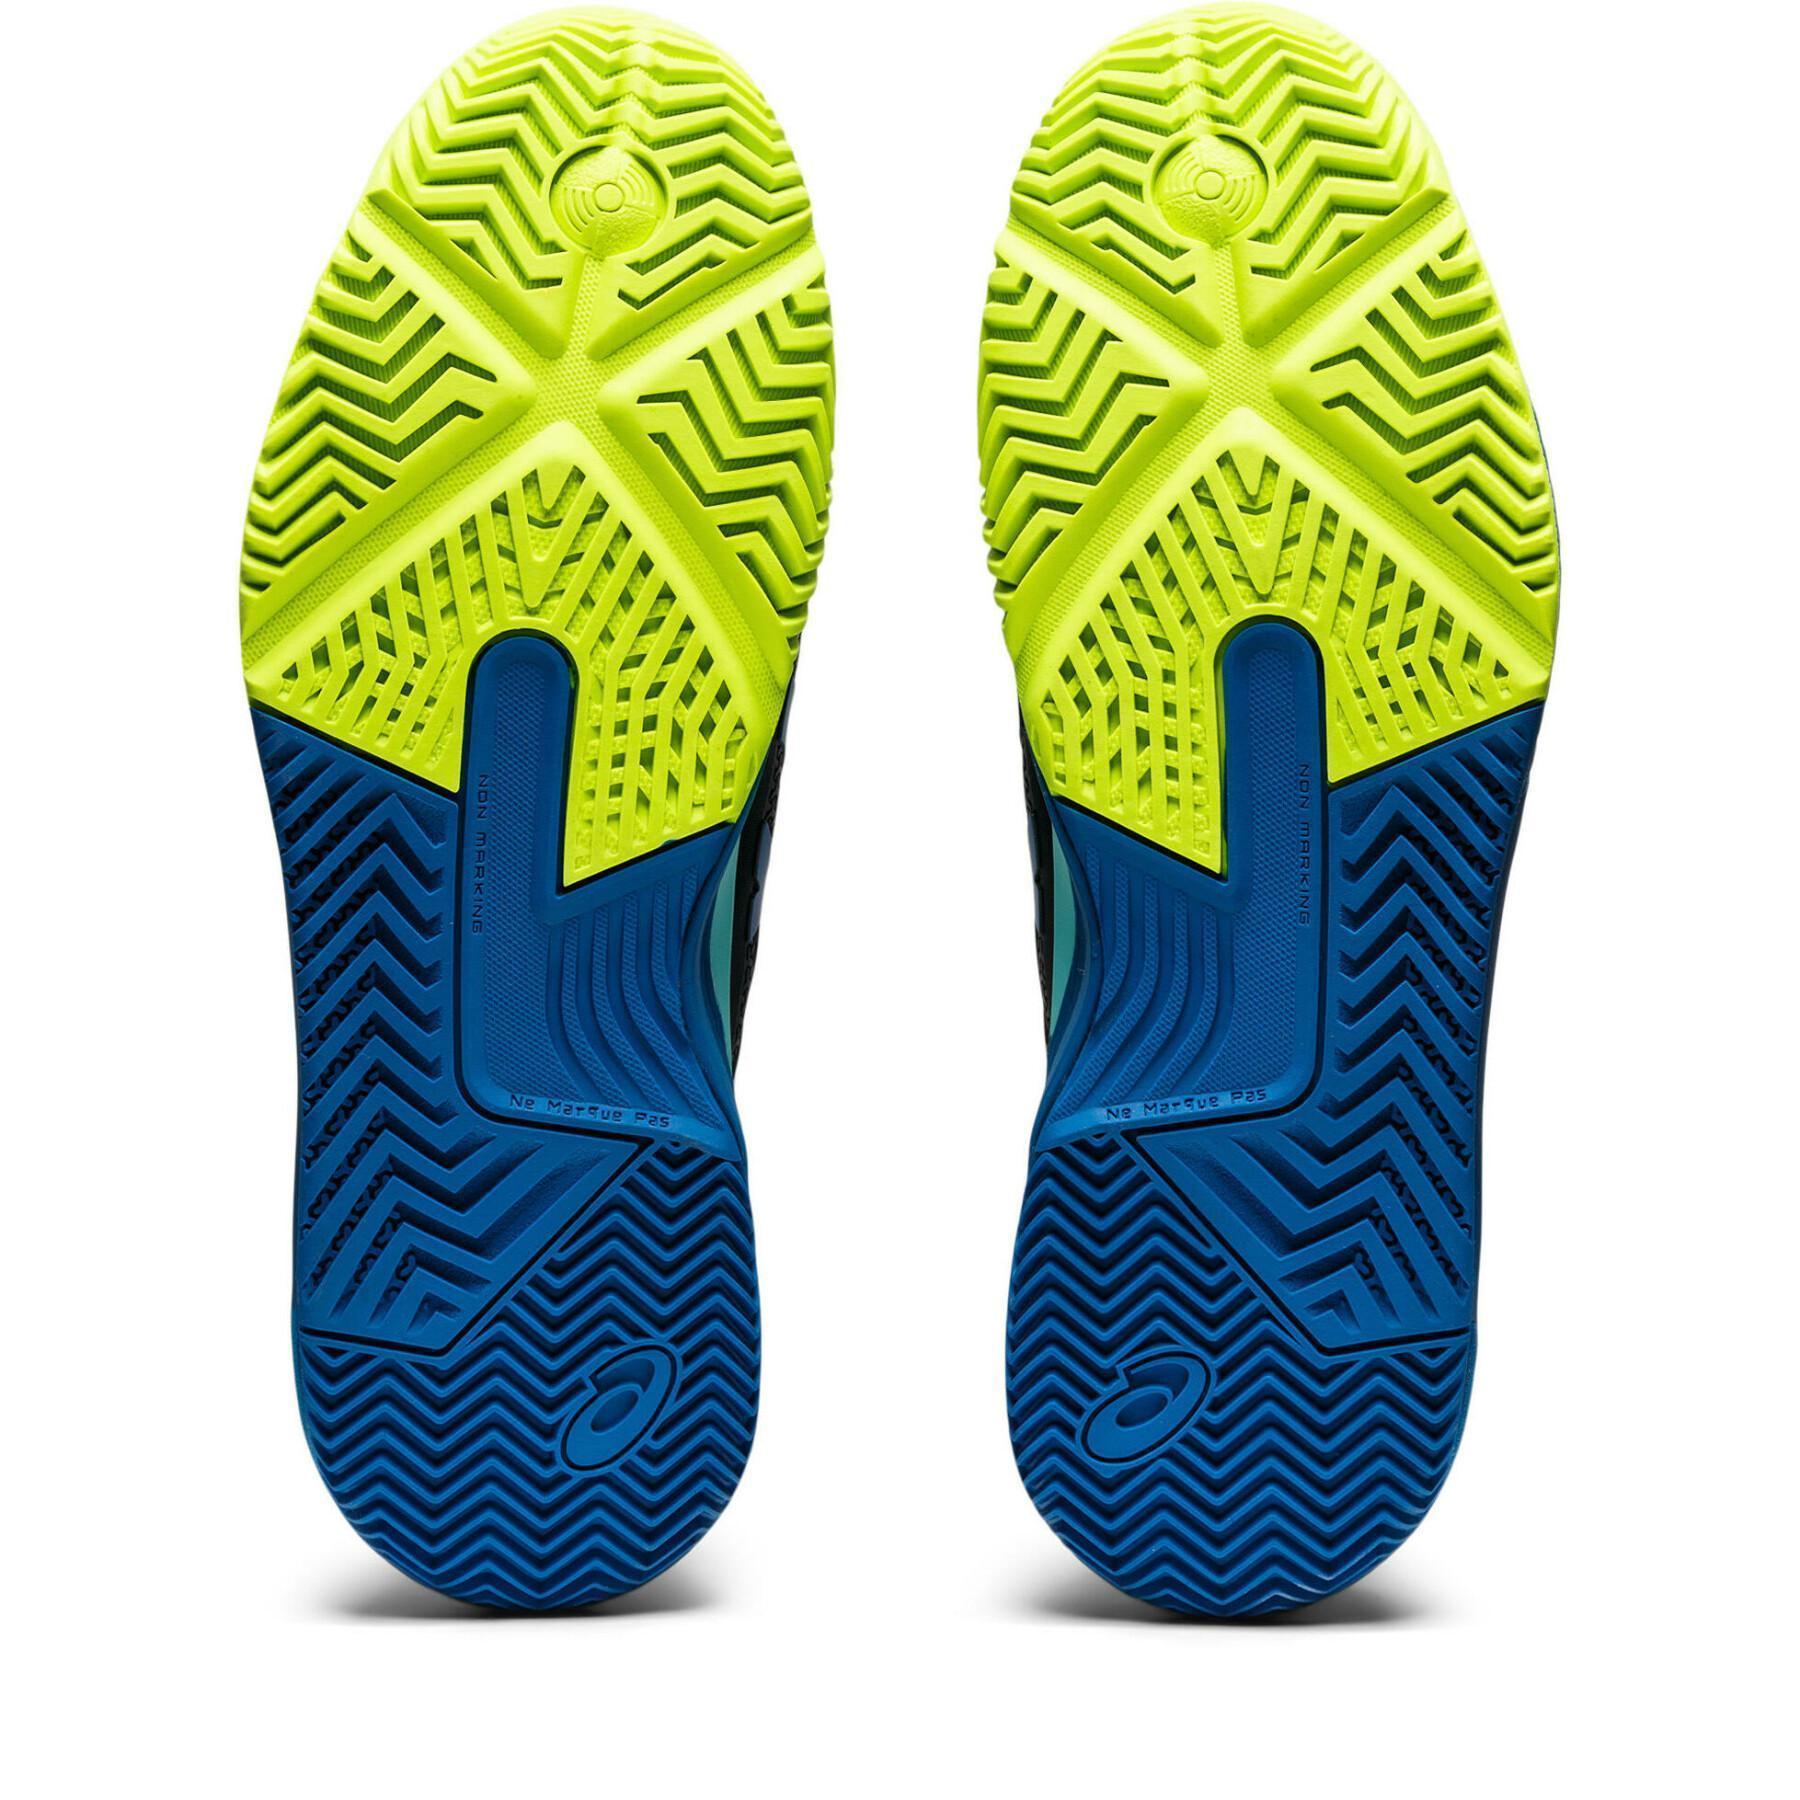 Chaussures de padel Asics Gel-Resolution 8 Padel